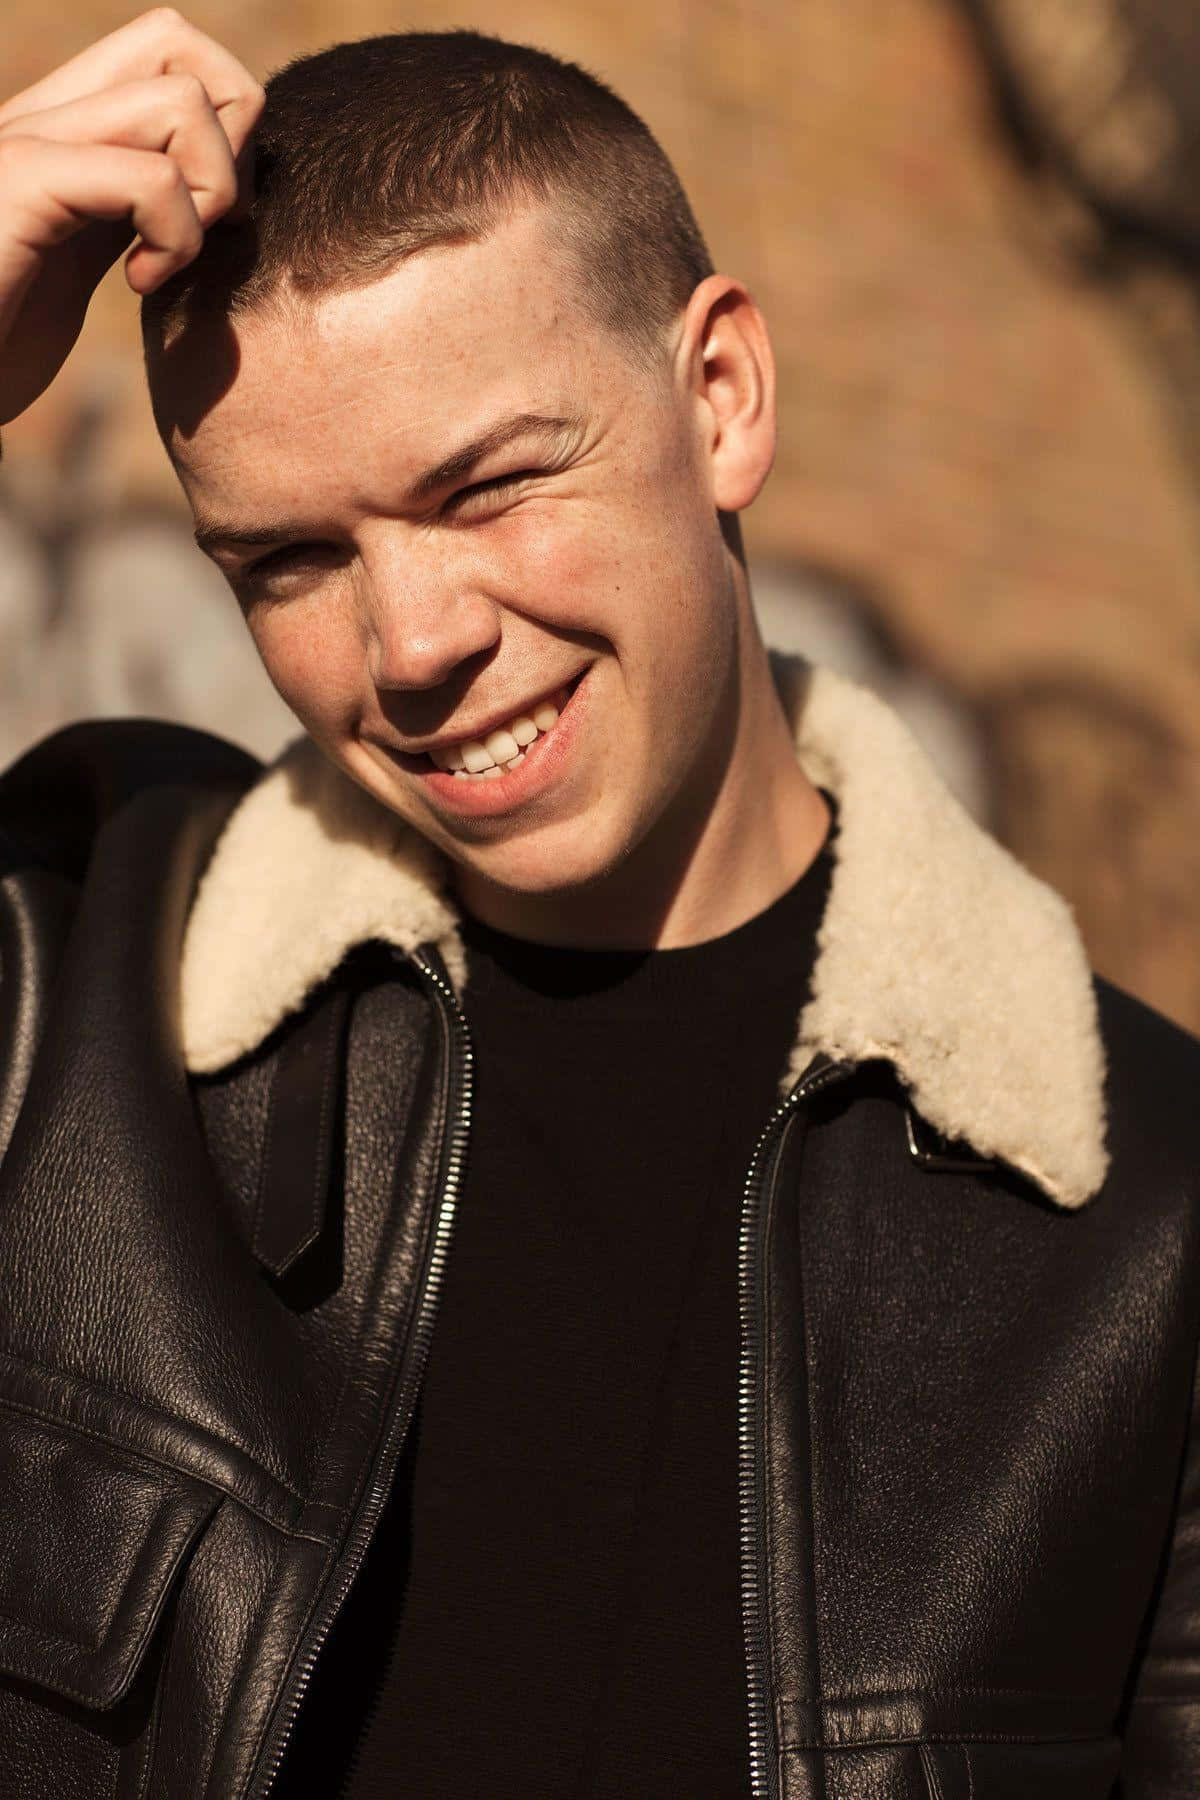 Smiling Manin Leather Jacket Wallpaper